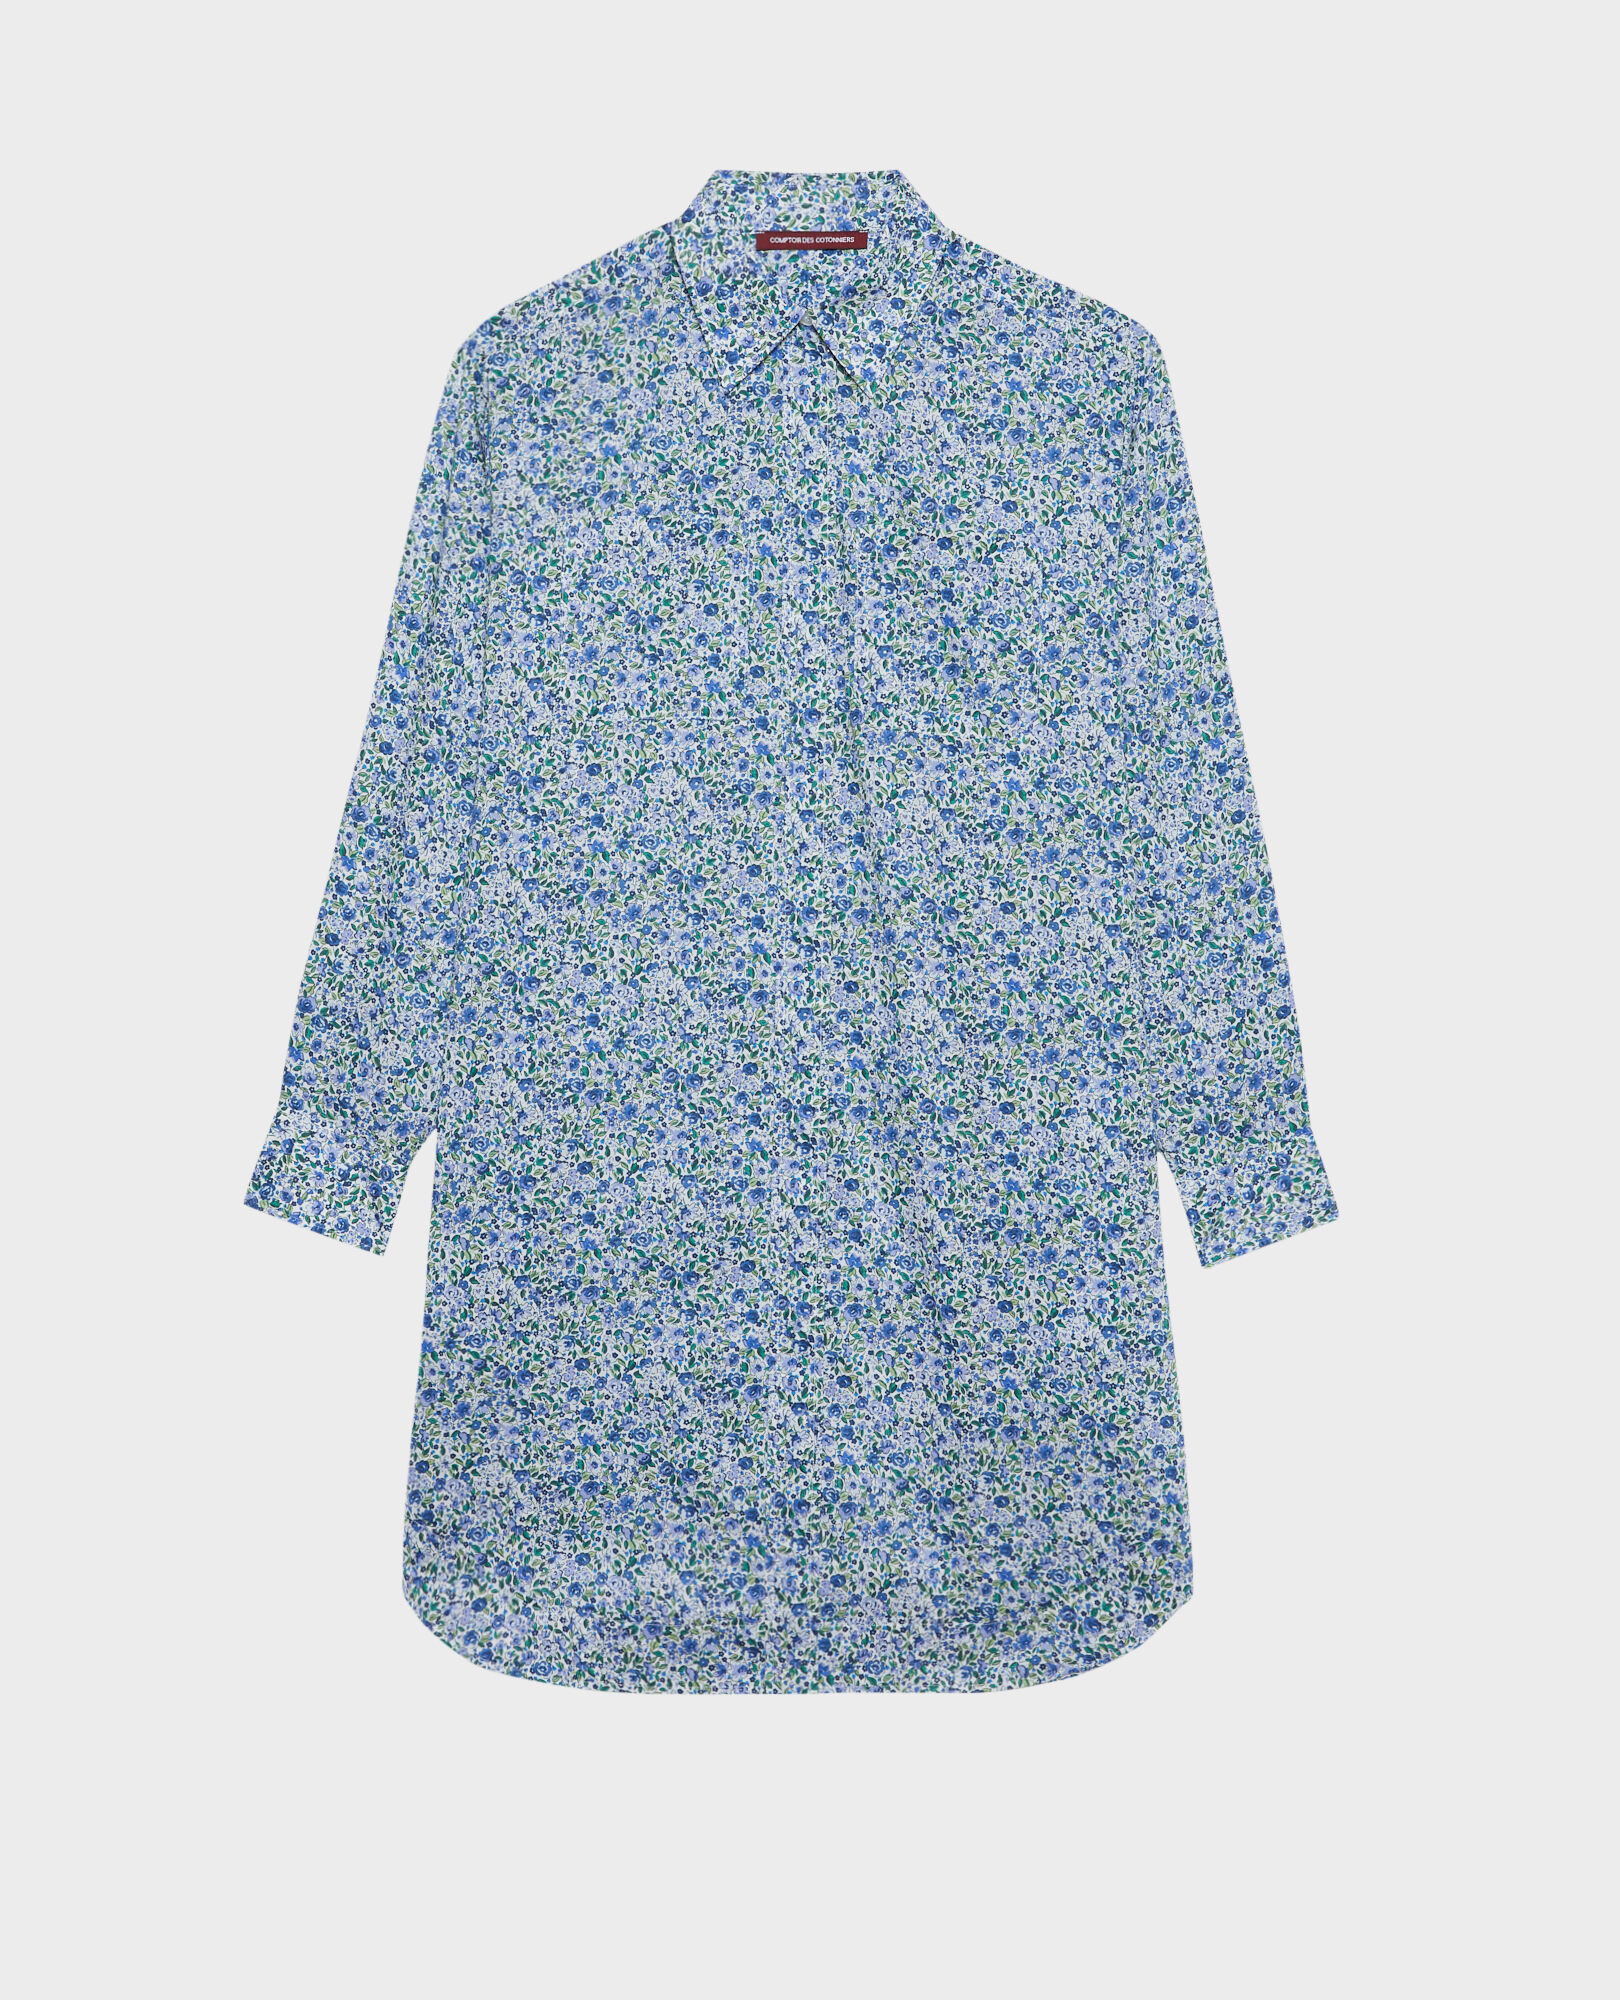 Hemdkleid aus Baumwolle 92 print blue 2sdr347c01